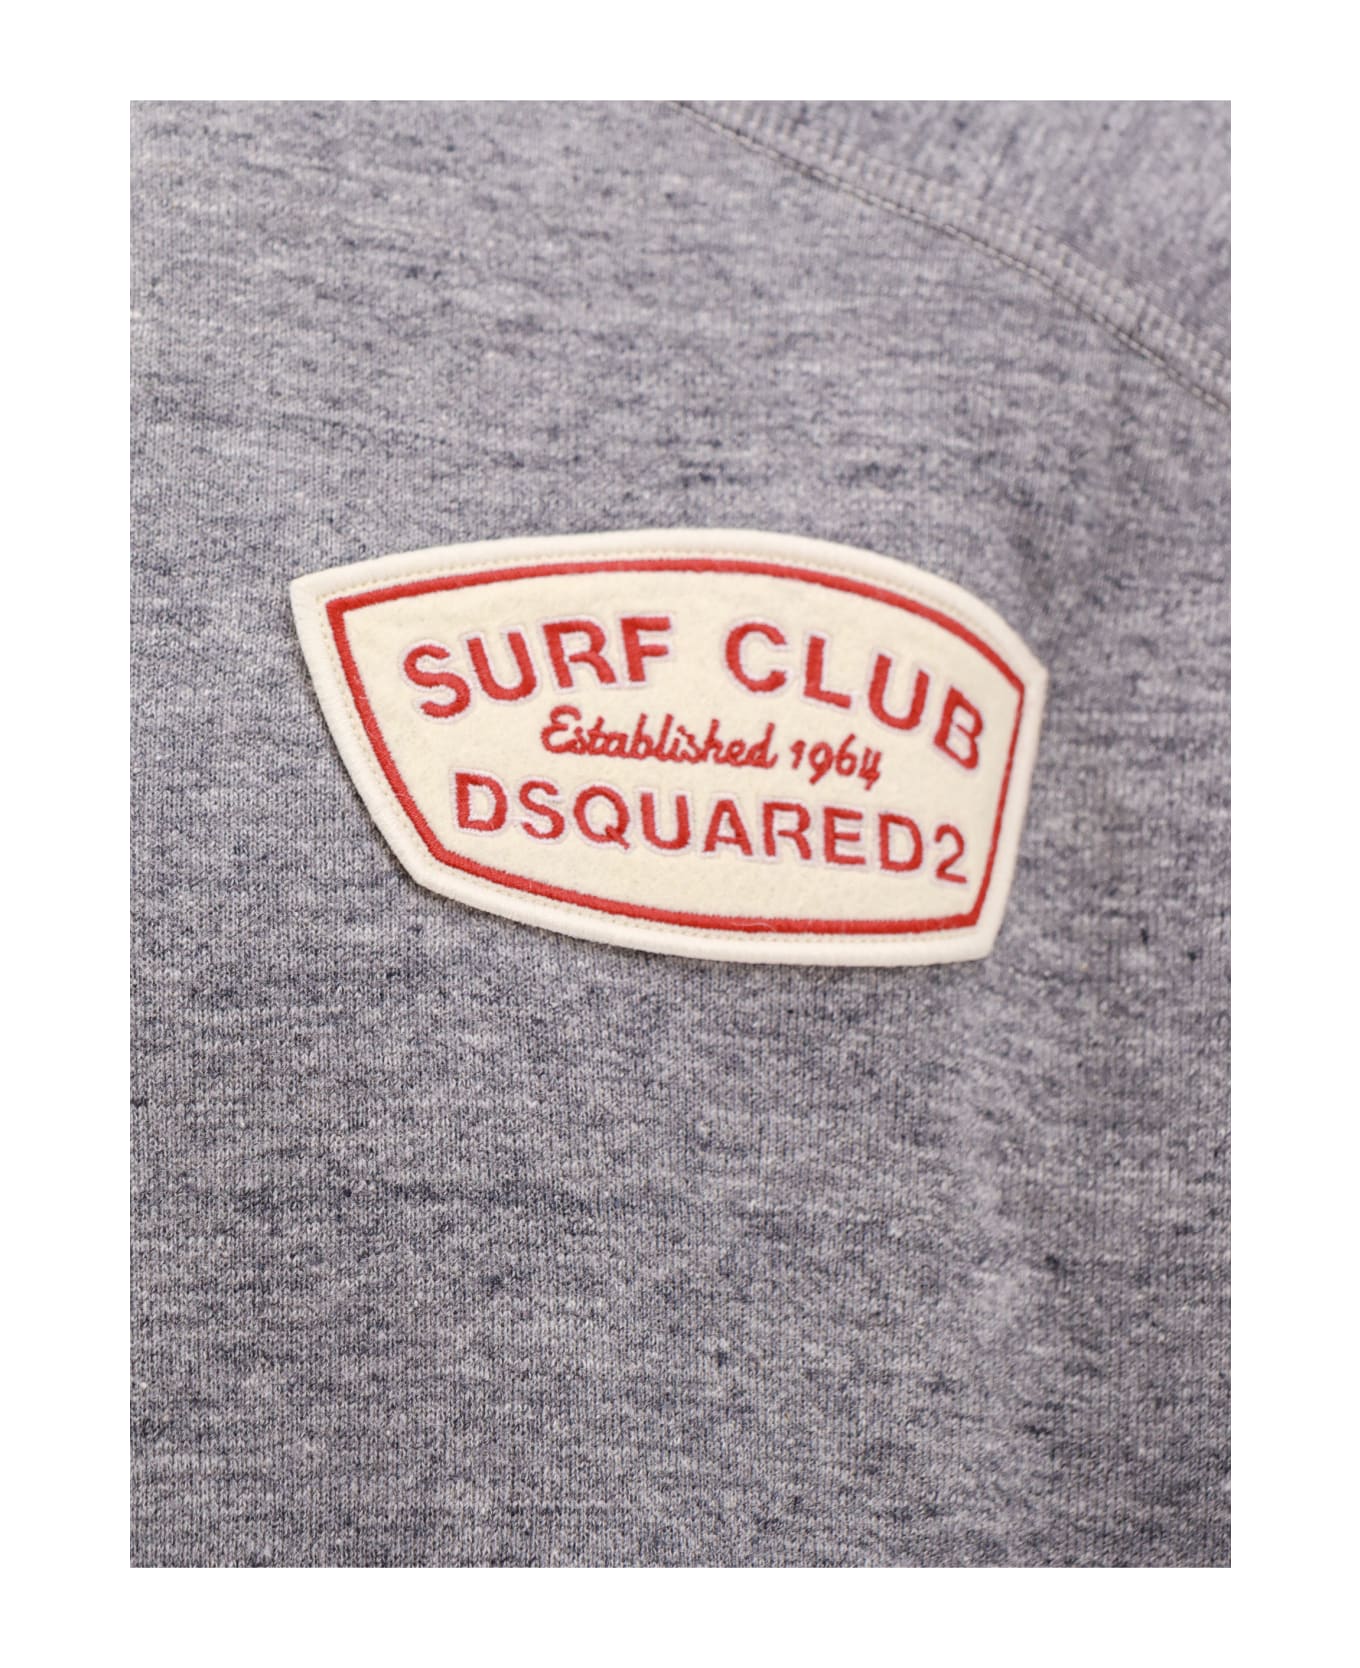 Dsquared2 Sweatshirt - Grey